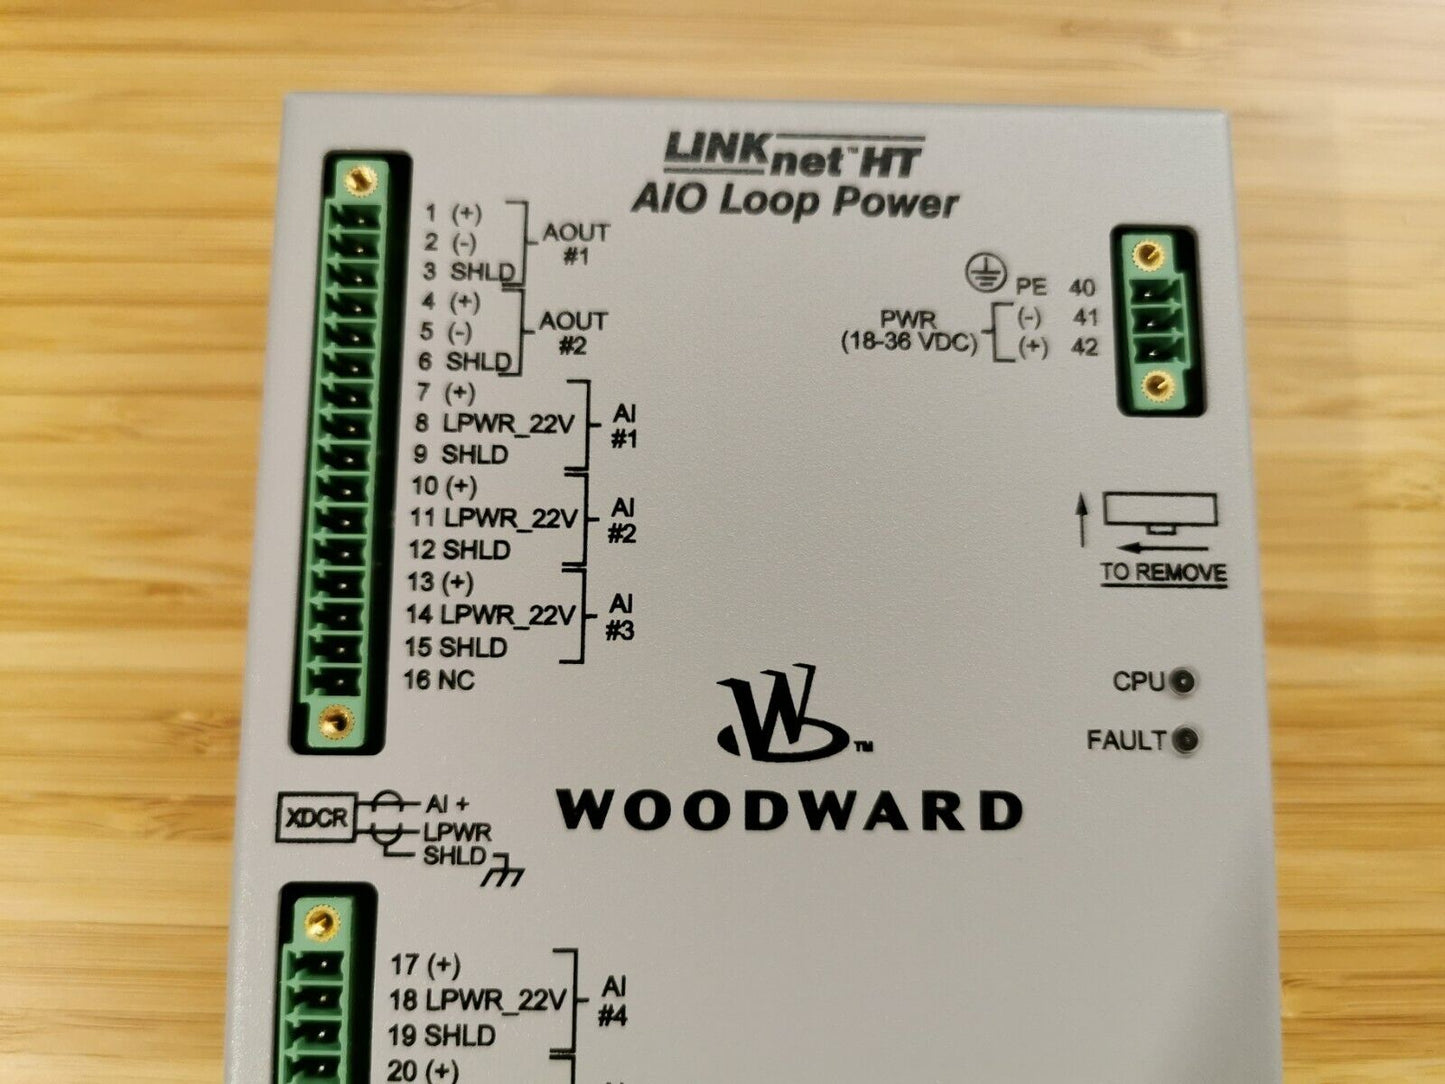 MINT CONDITION Woodward 8200-1203 LINKNET HT LOOP Power Turbine Engine Control